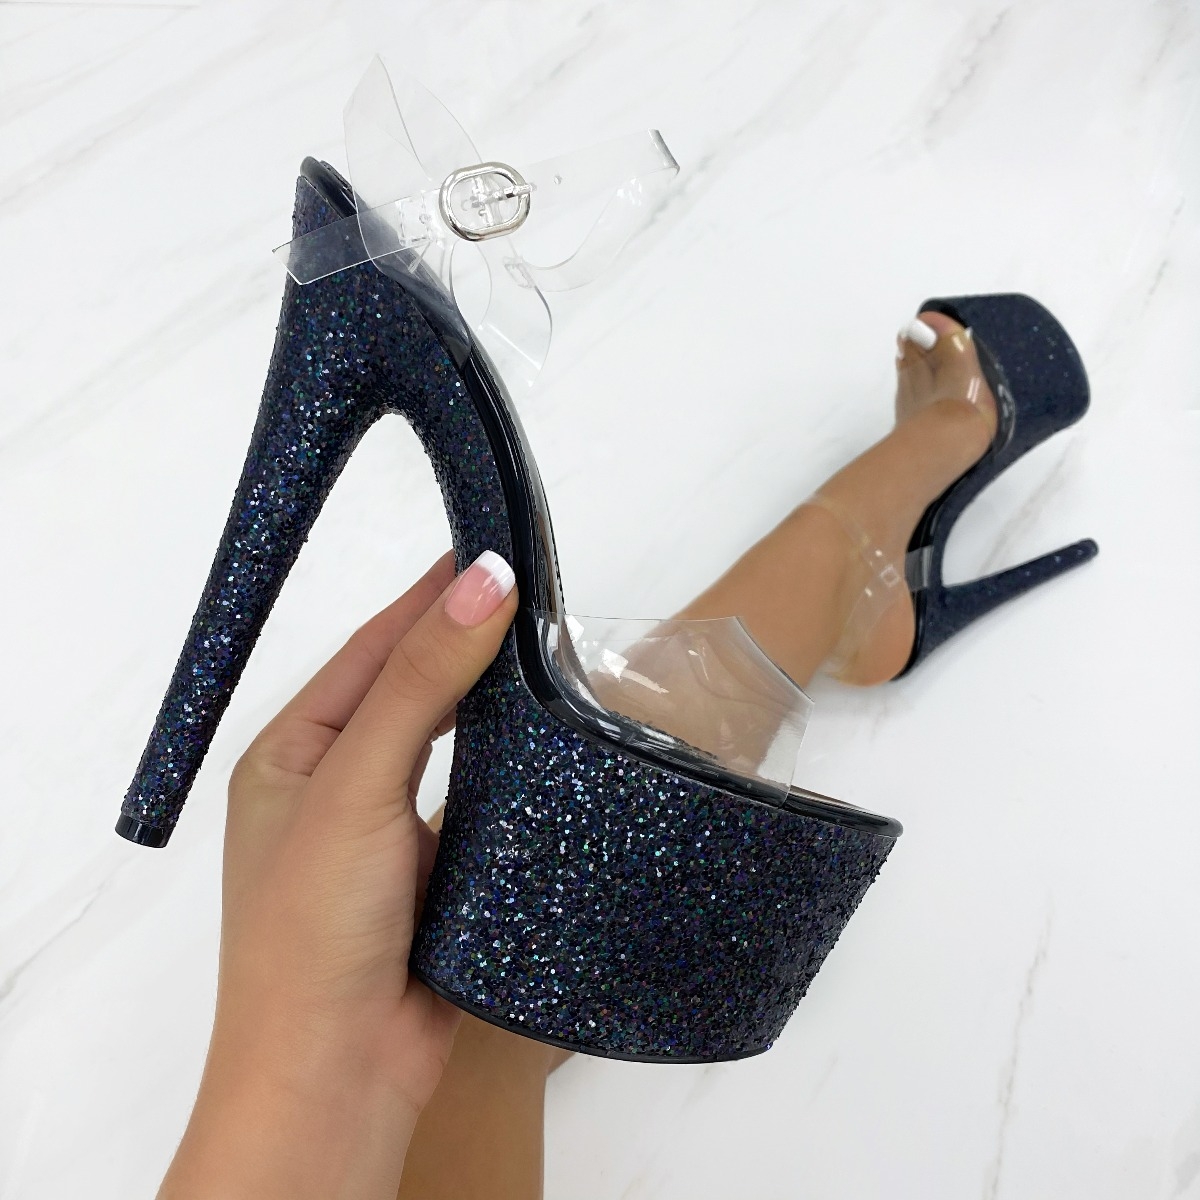 Buy black Heeled Sandals for Women by CATWALK Online | Ajio.com